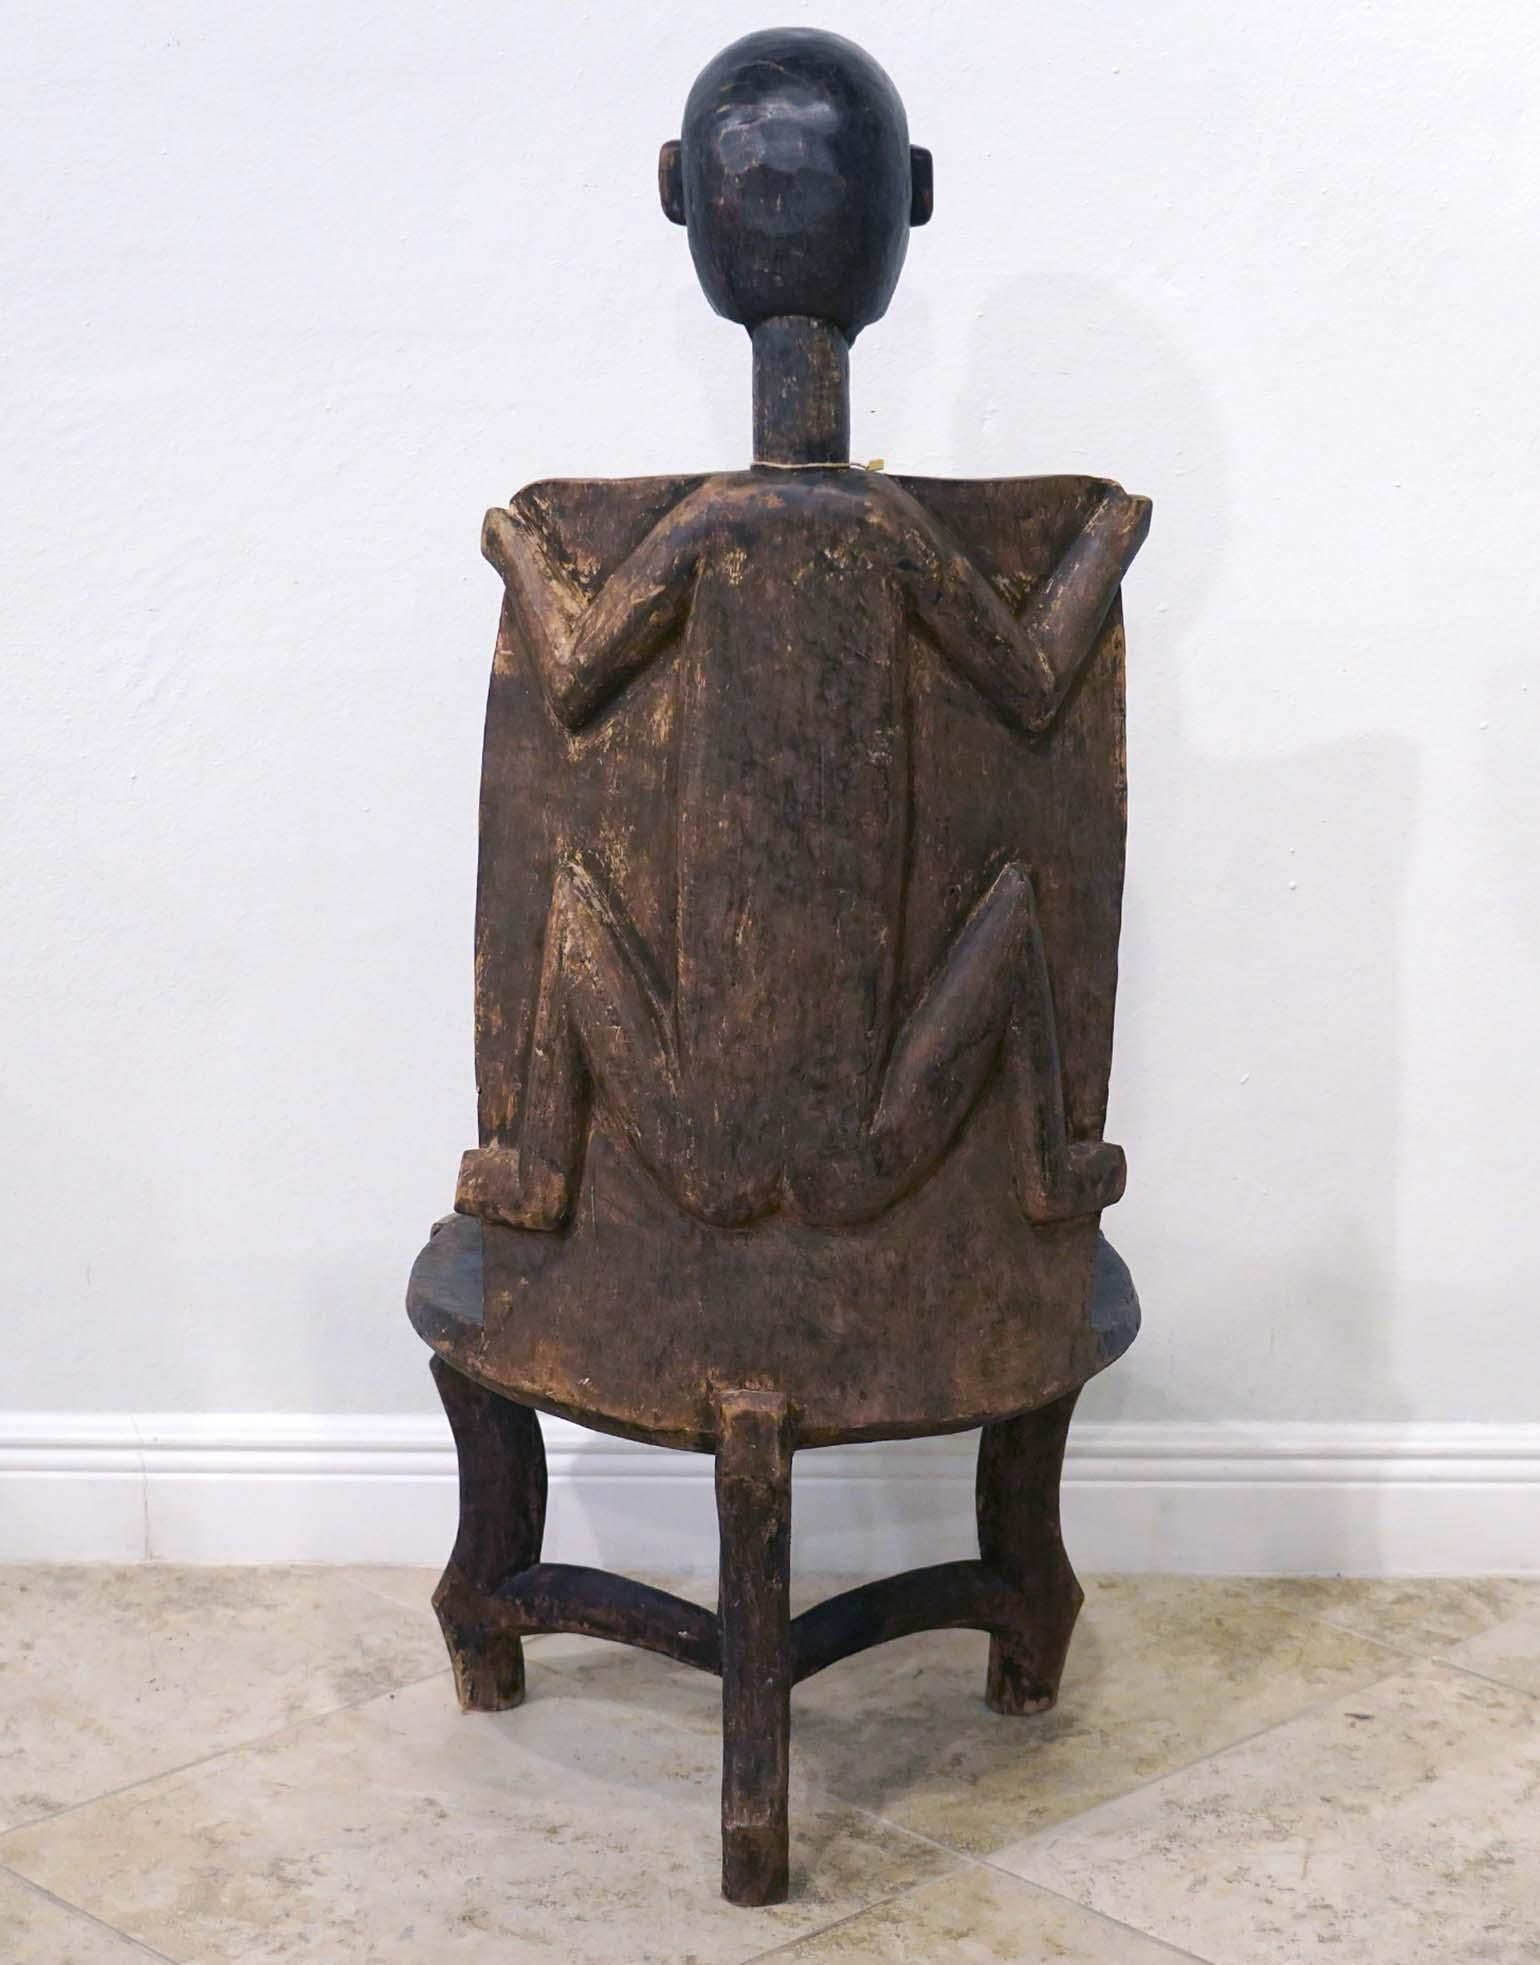 Tanzanian Large African Figural Throne Chair by the Nyamwezi People, Tanzania 20th C.